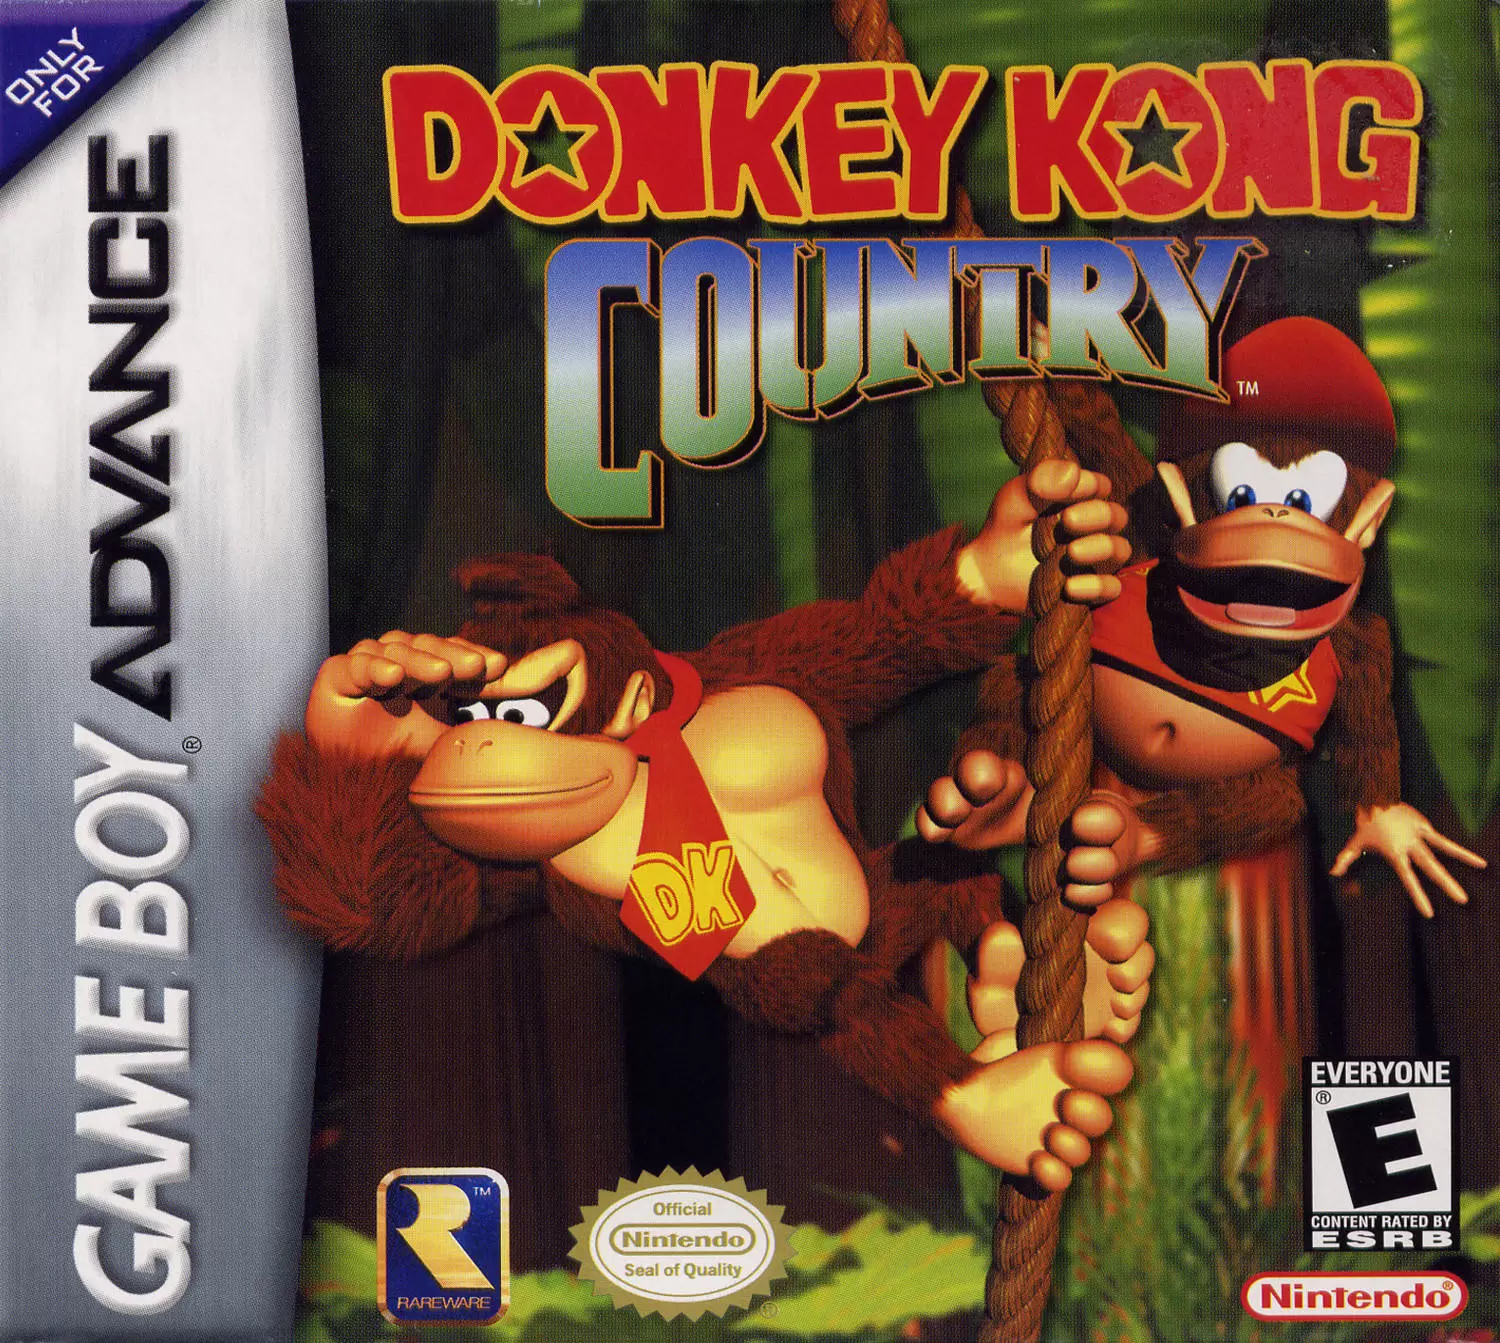 Game Boy Advance Games - Donkey Kong Country